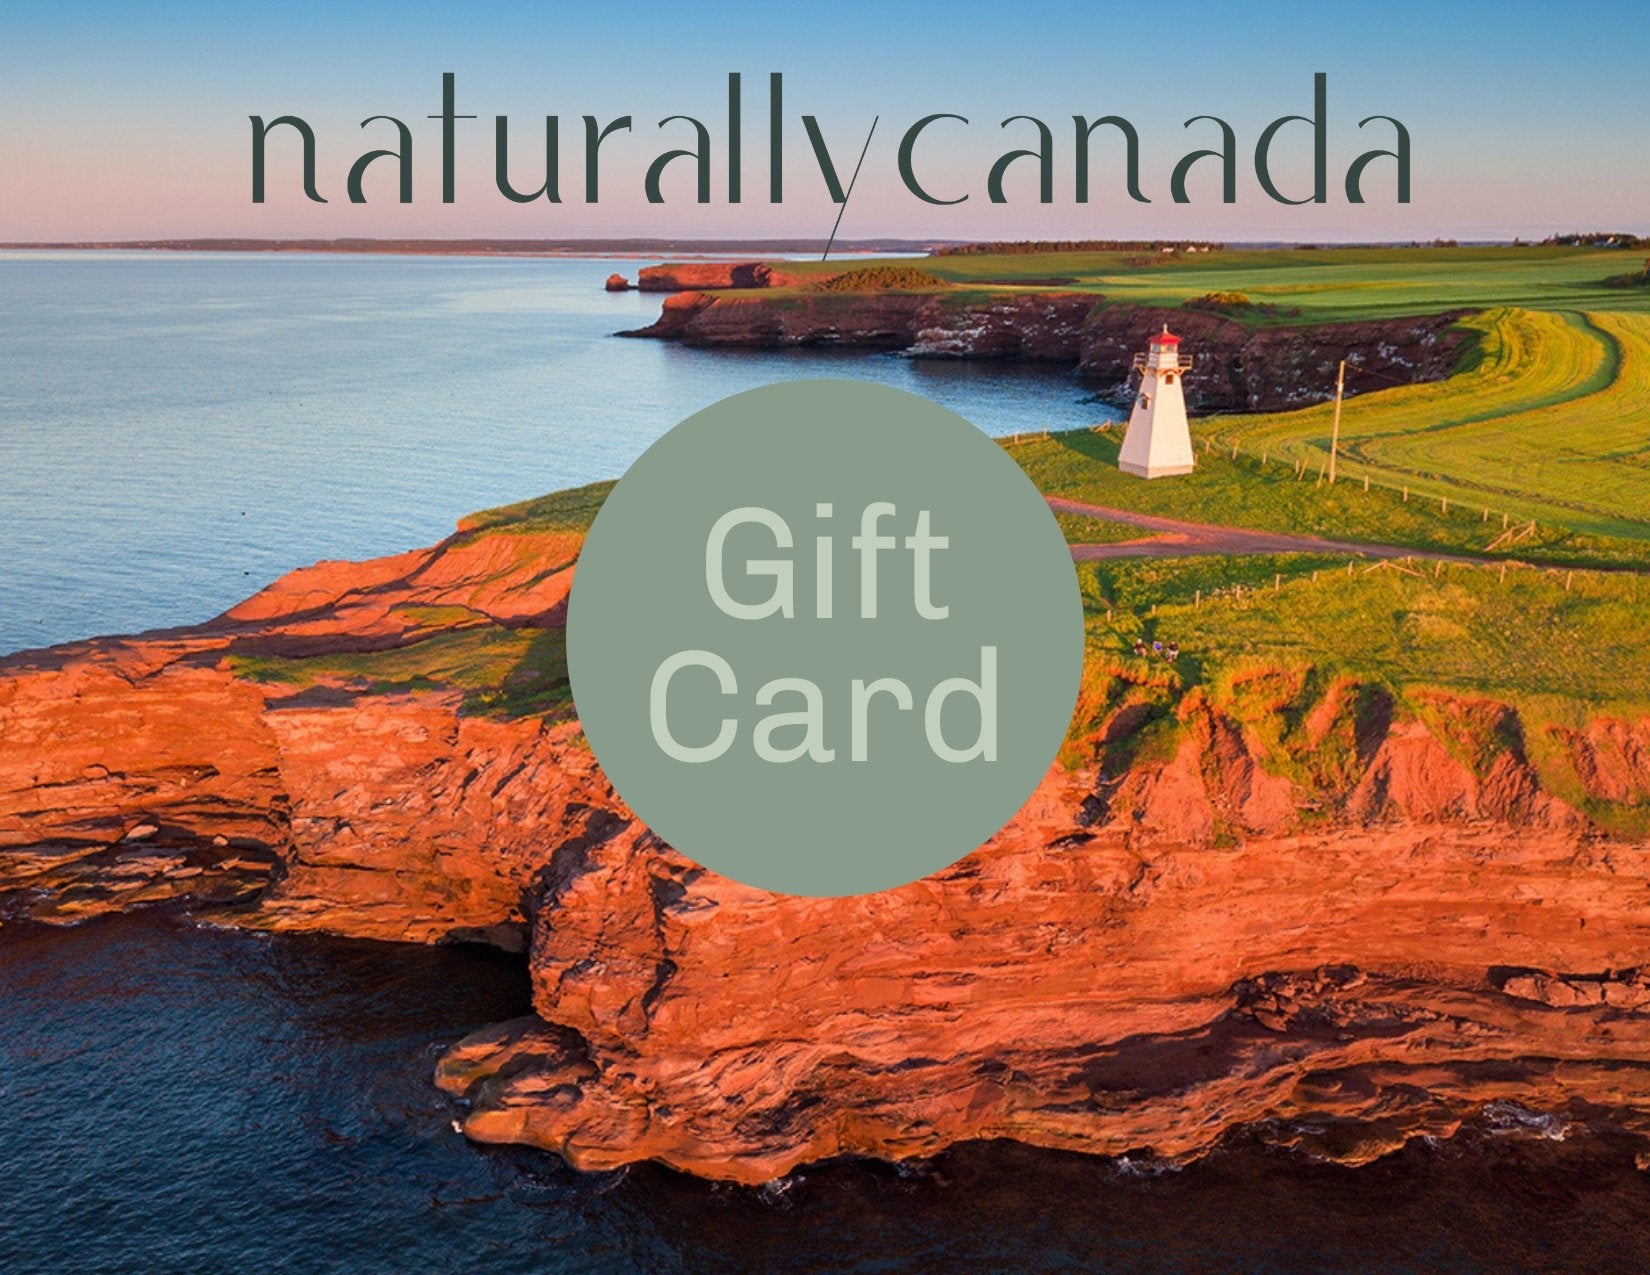 Naturally Canada Gift Card - Naturally Canada